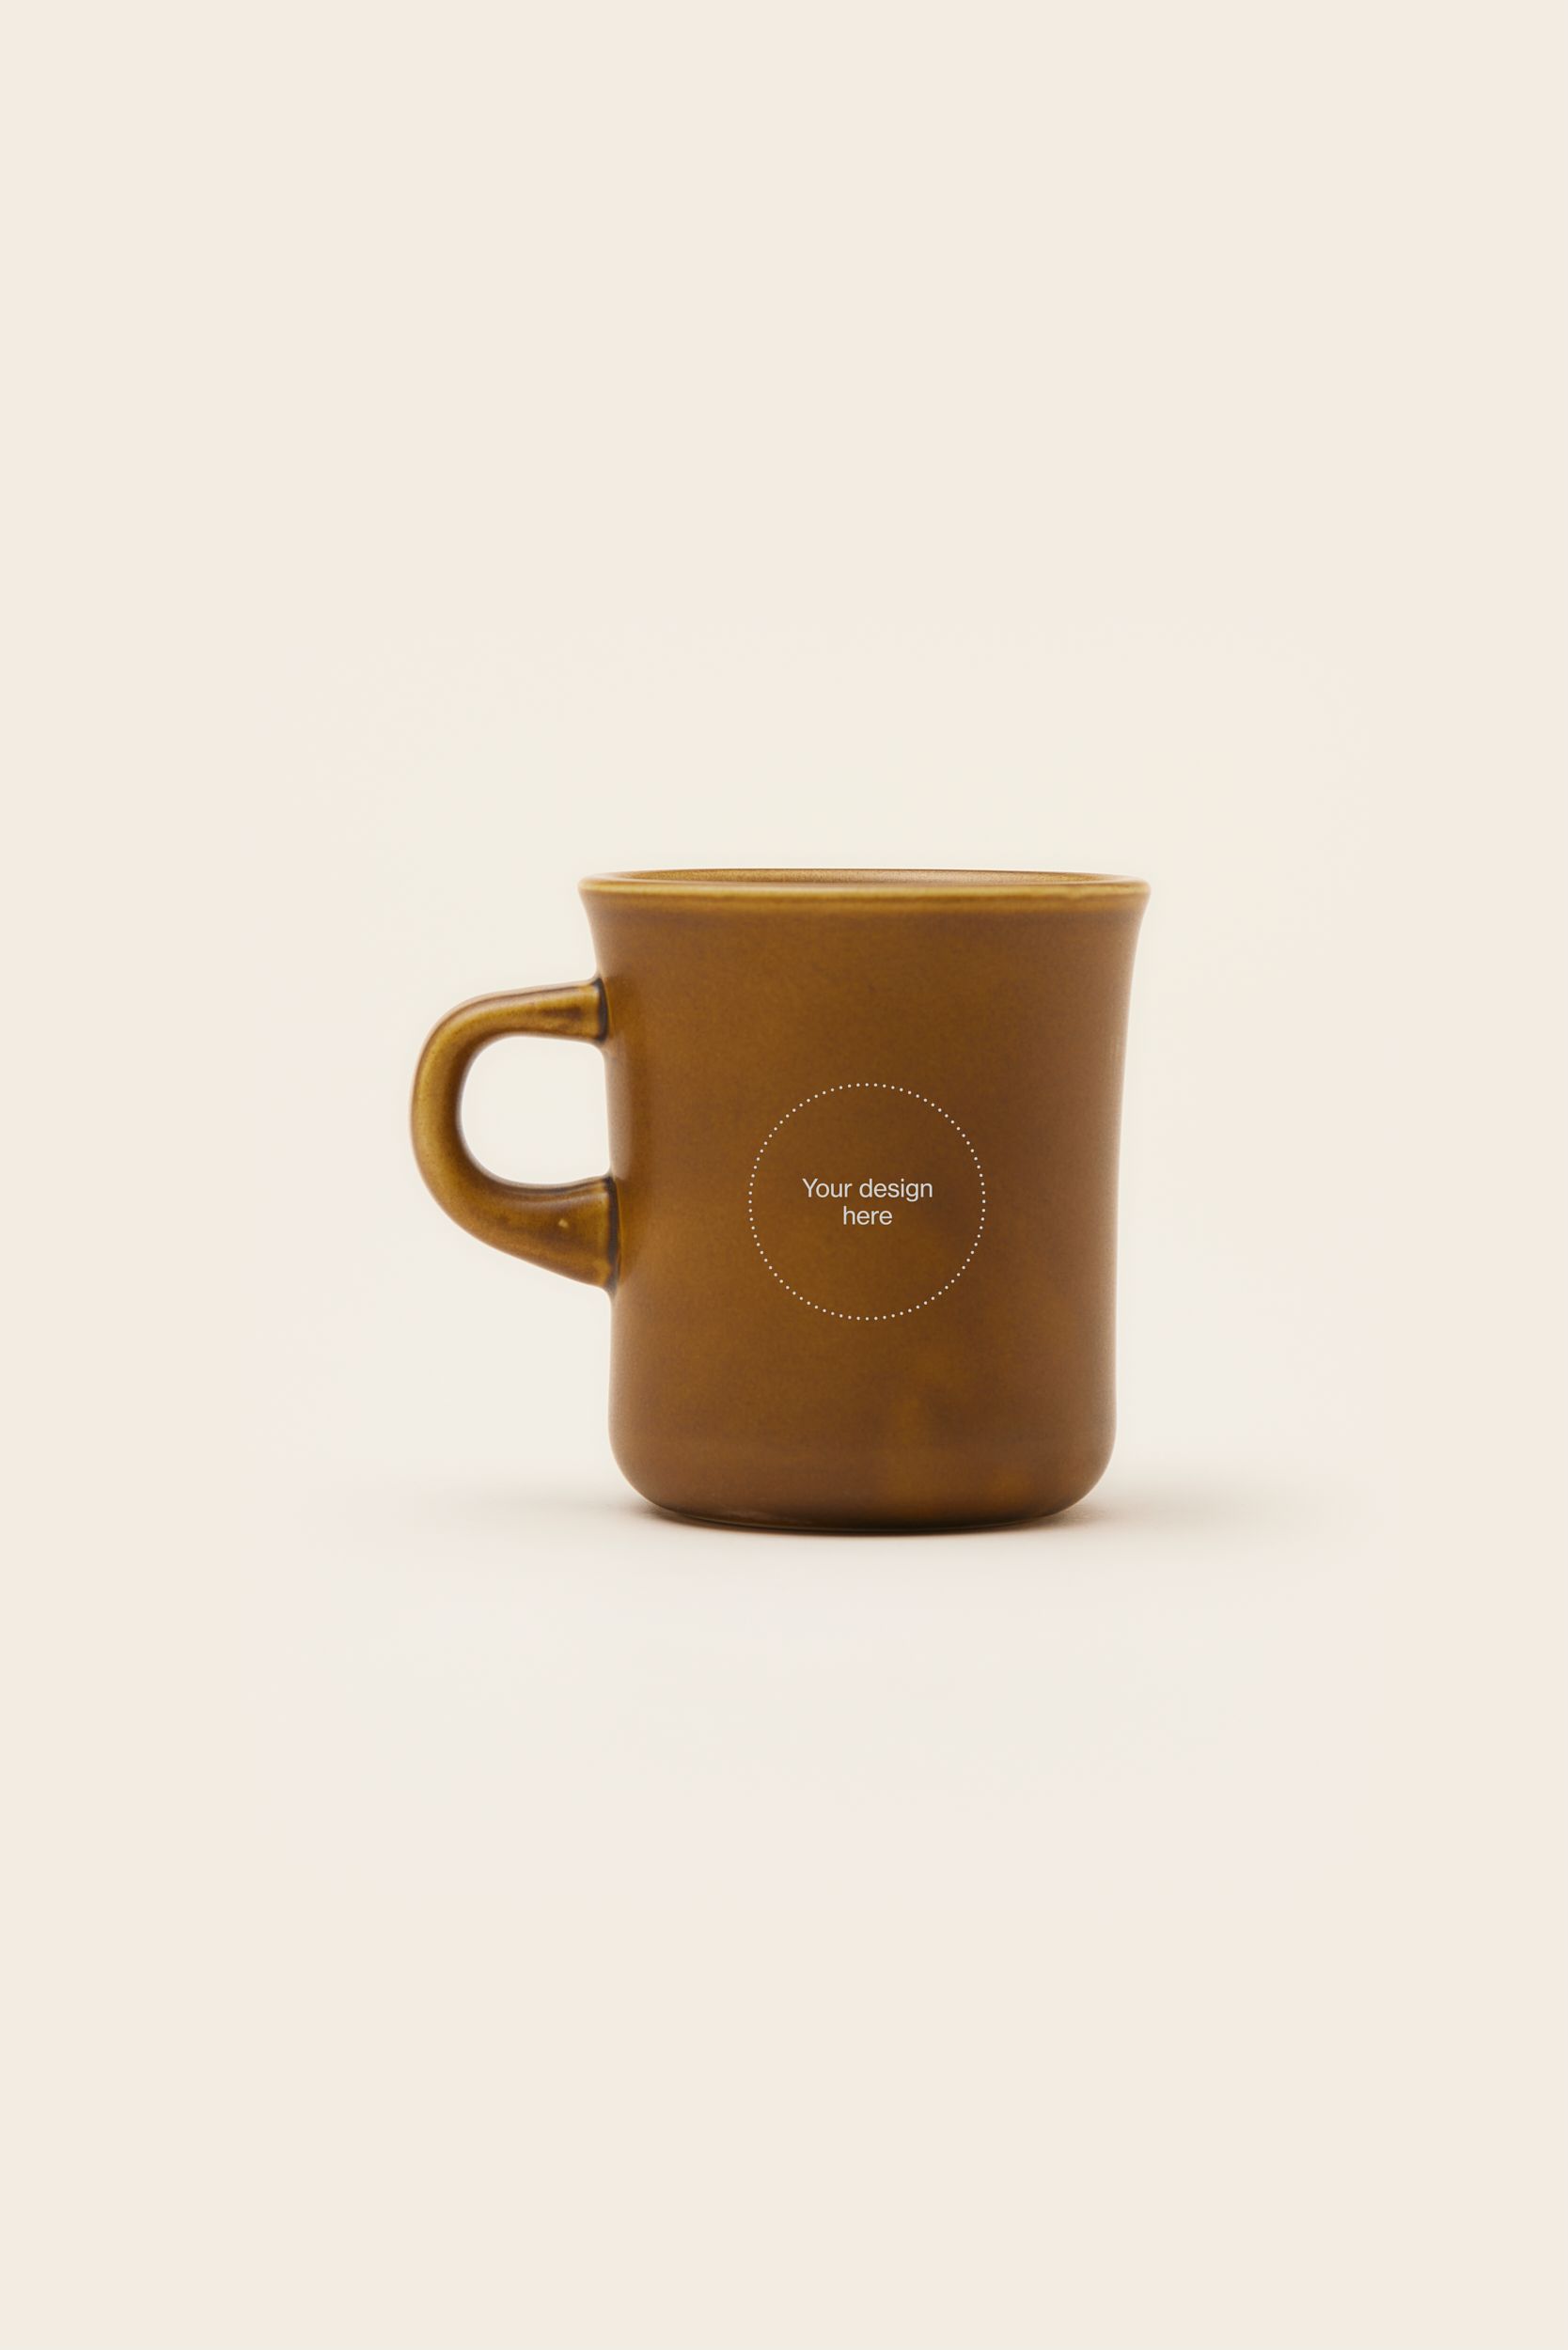 MERCHERY_Kinto coffee mug_0.25L_brown_front+logo.jpg